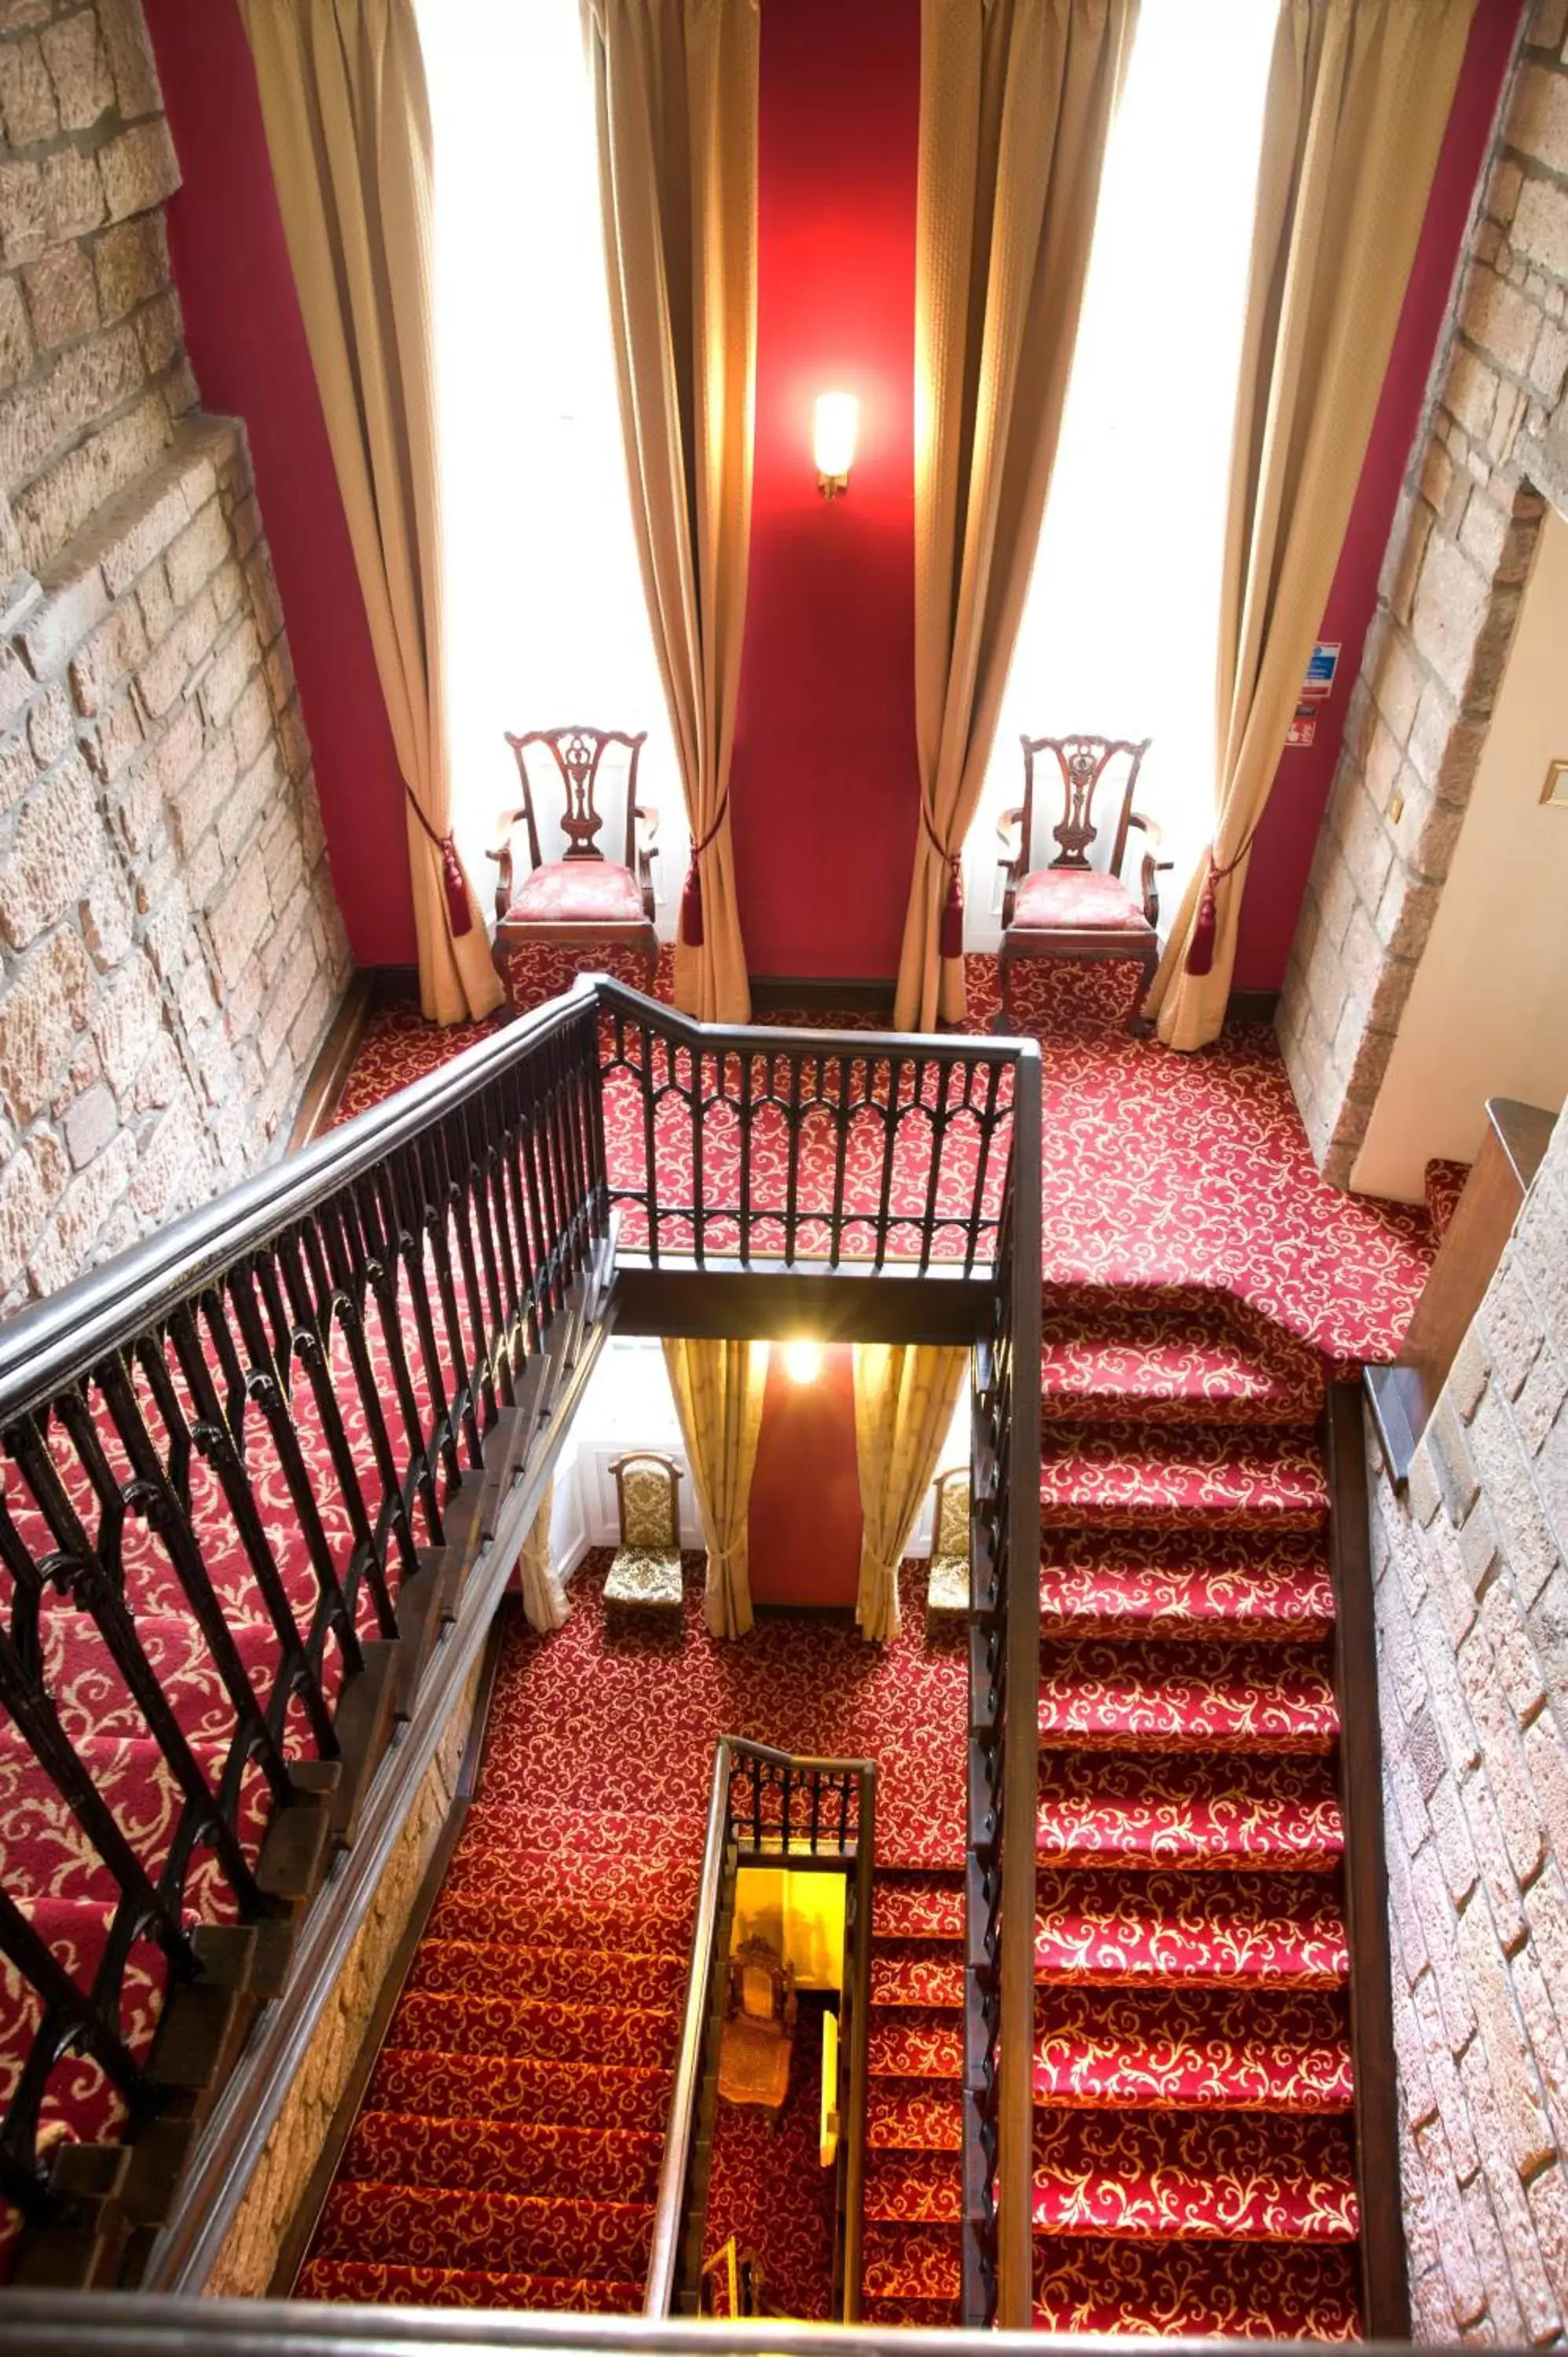 Area and facilities in Dalhousie Castle Hotel